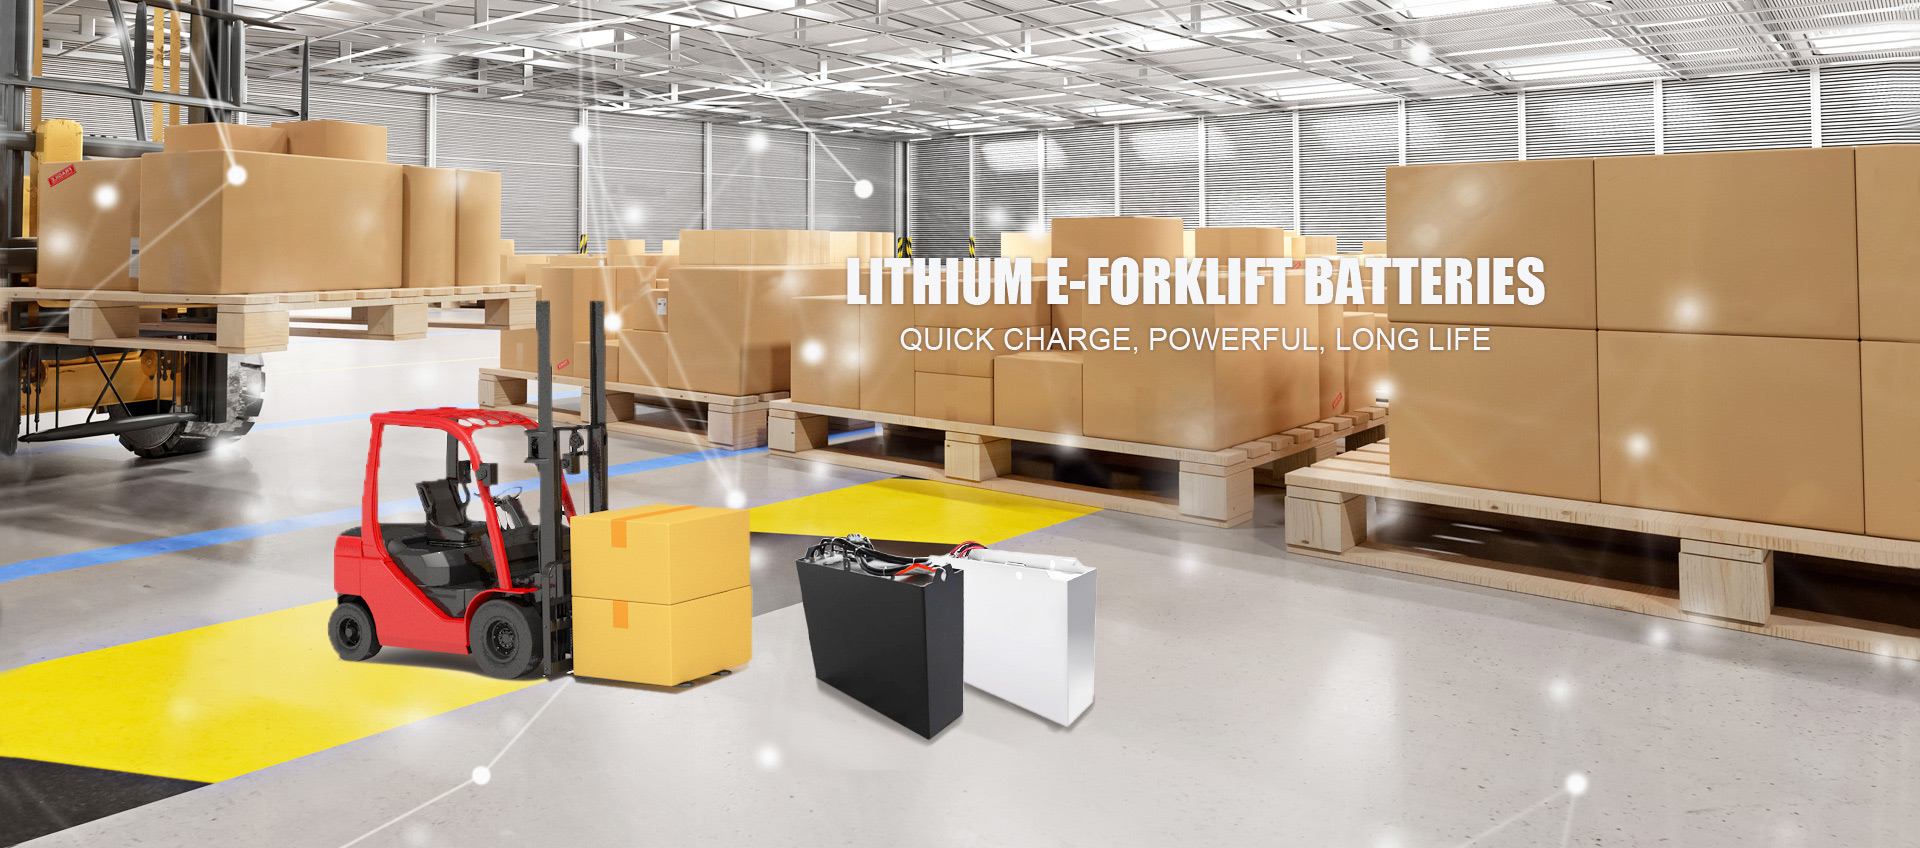 Lithium e-Forklift batteries